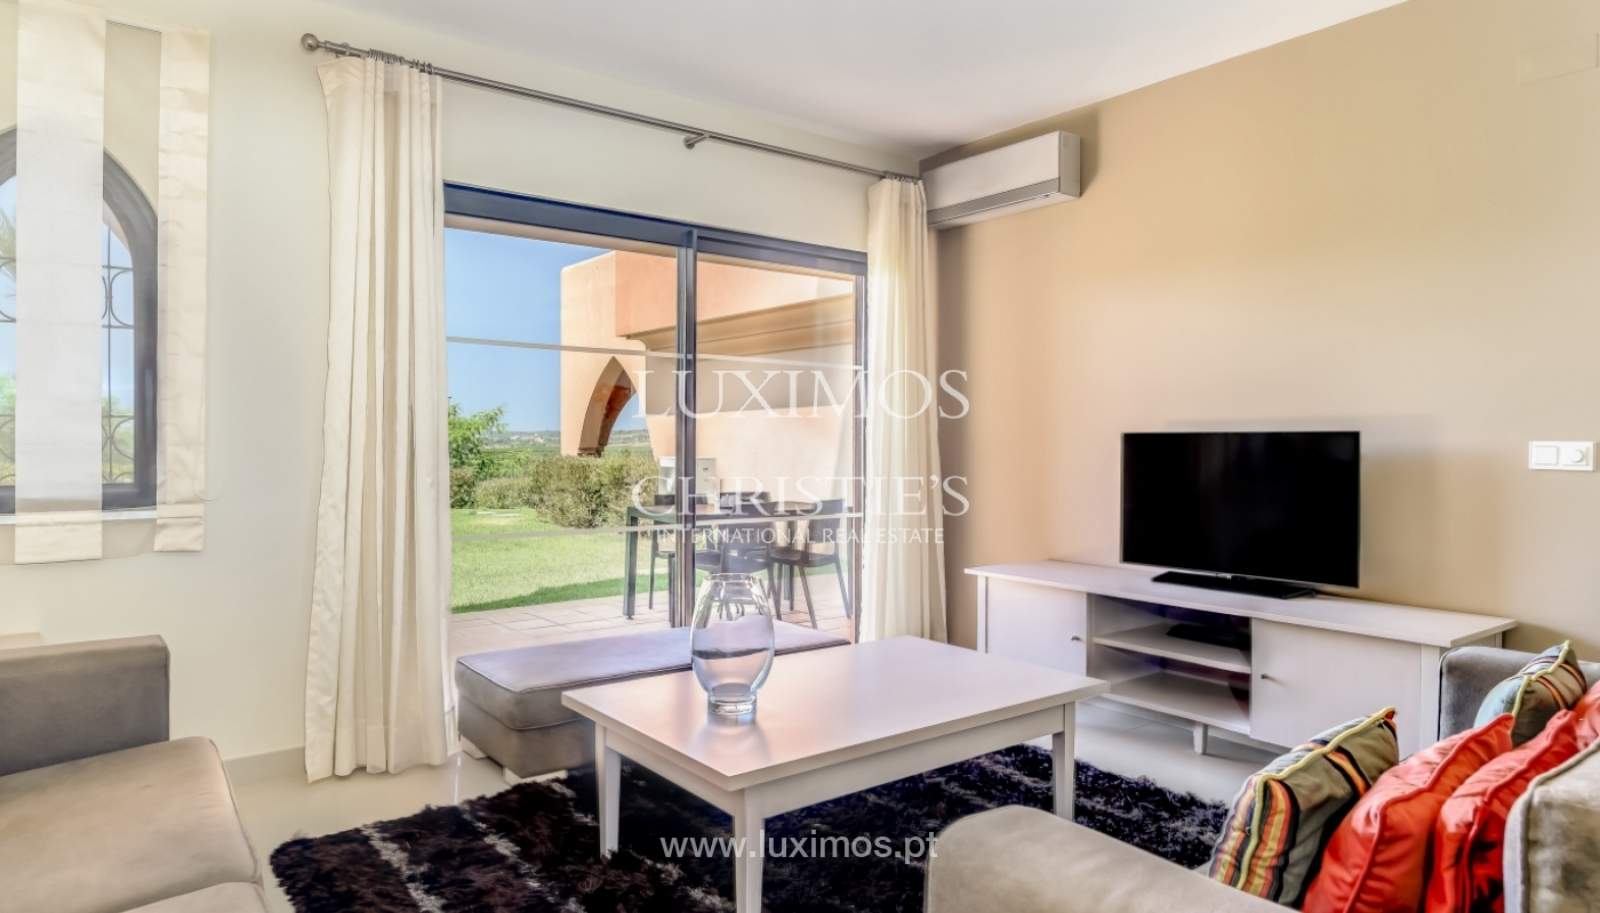 Sale of contemporary apartment in exclusive Golf Resort, Algarve_152570